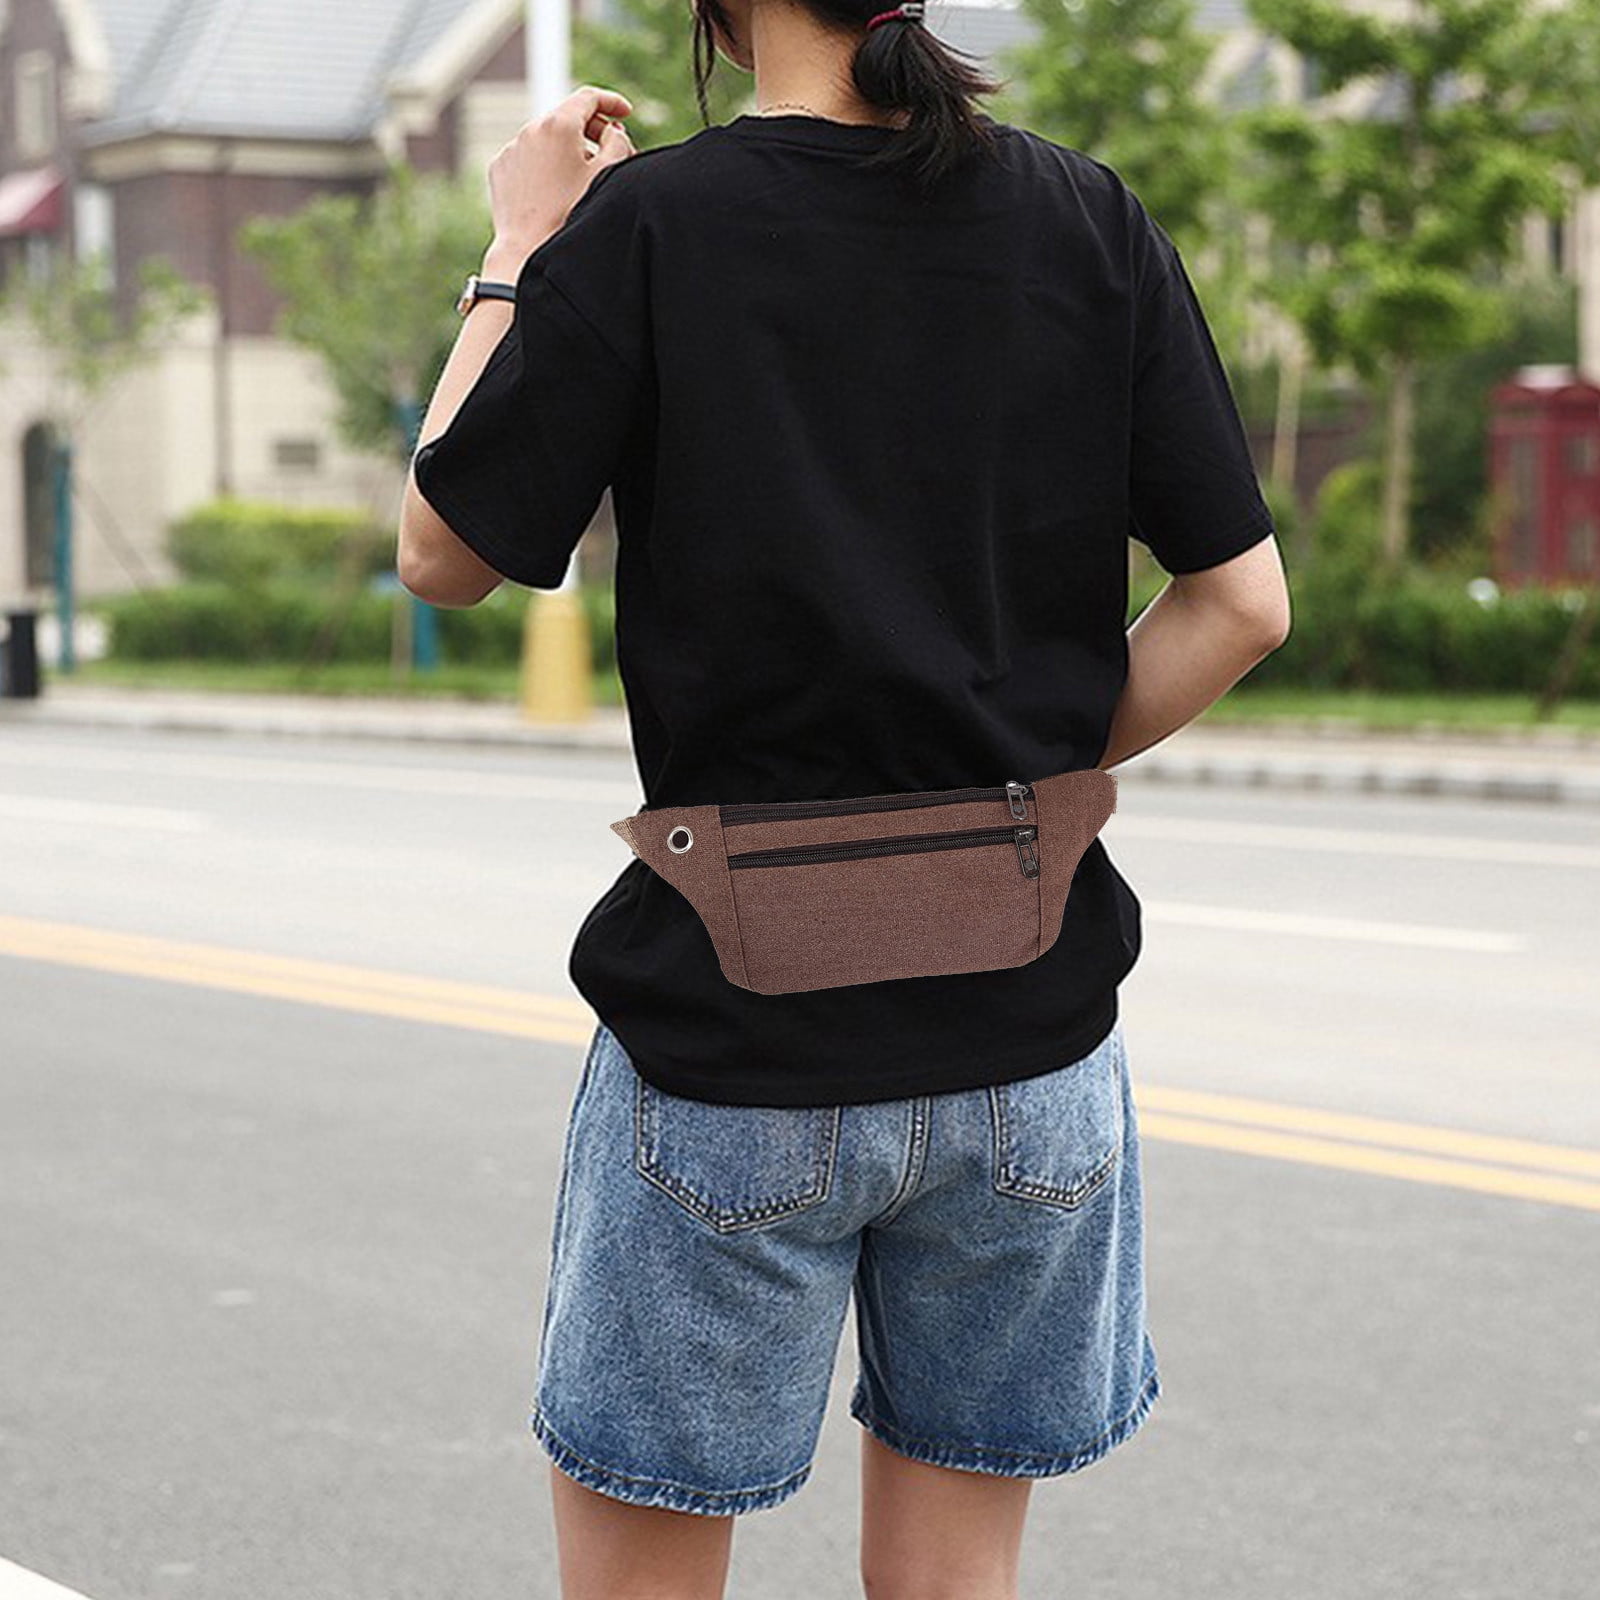  Fanny Belt Bag Waist Pack Crossbody Bags Bum Bag for Running  Hiking Travel Workout Adjustable Strap for Women-green : Sports & Outdoors